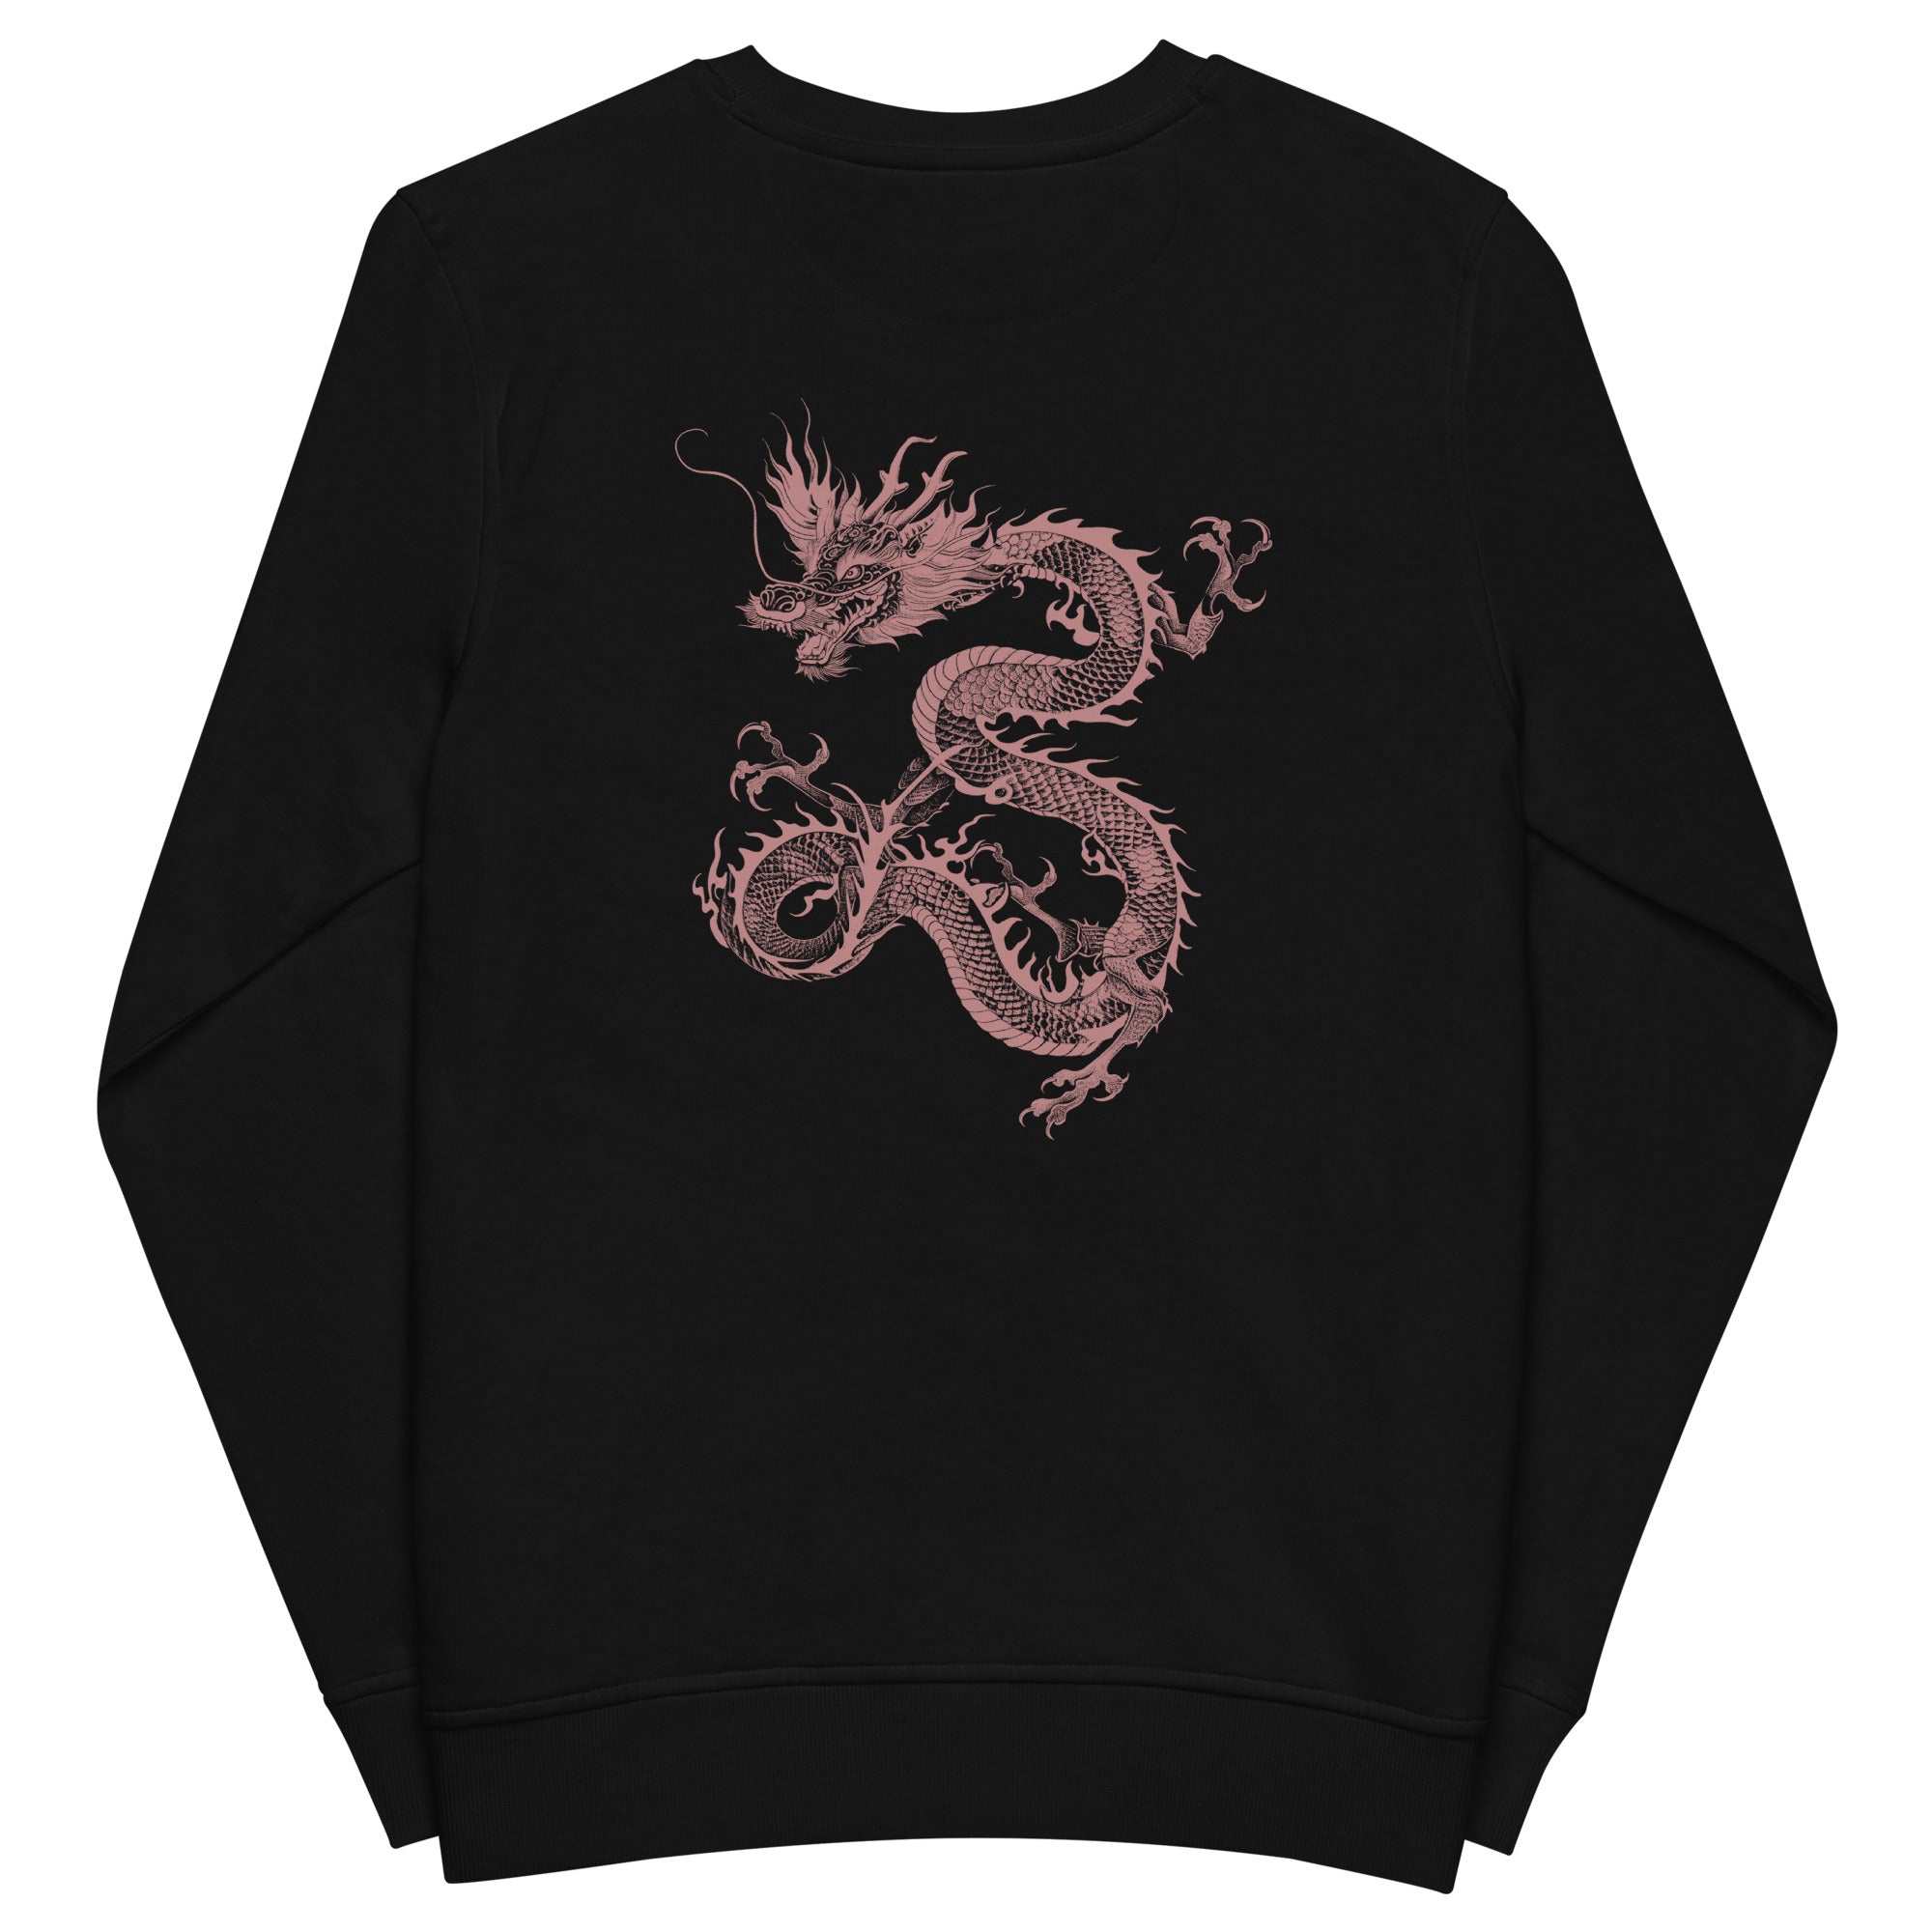 unisex-organic-sweatshirt-black-back-65d21f9a953d6.jpg